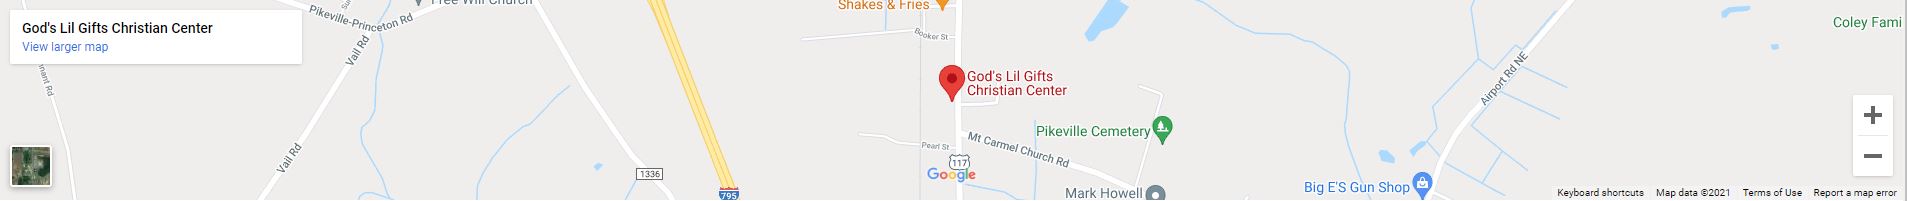 God's Lil Gifts Christian Center